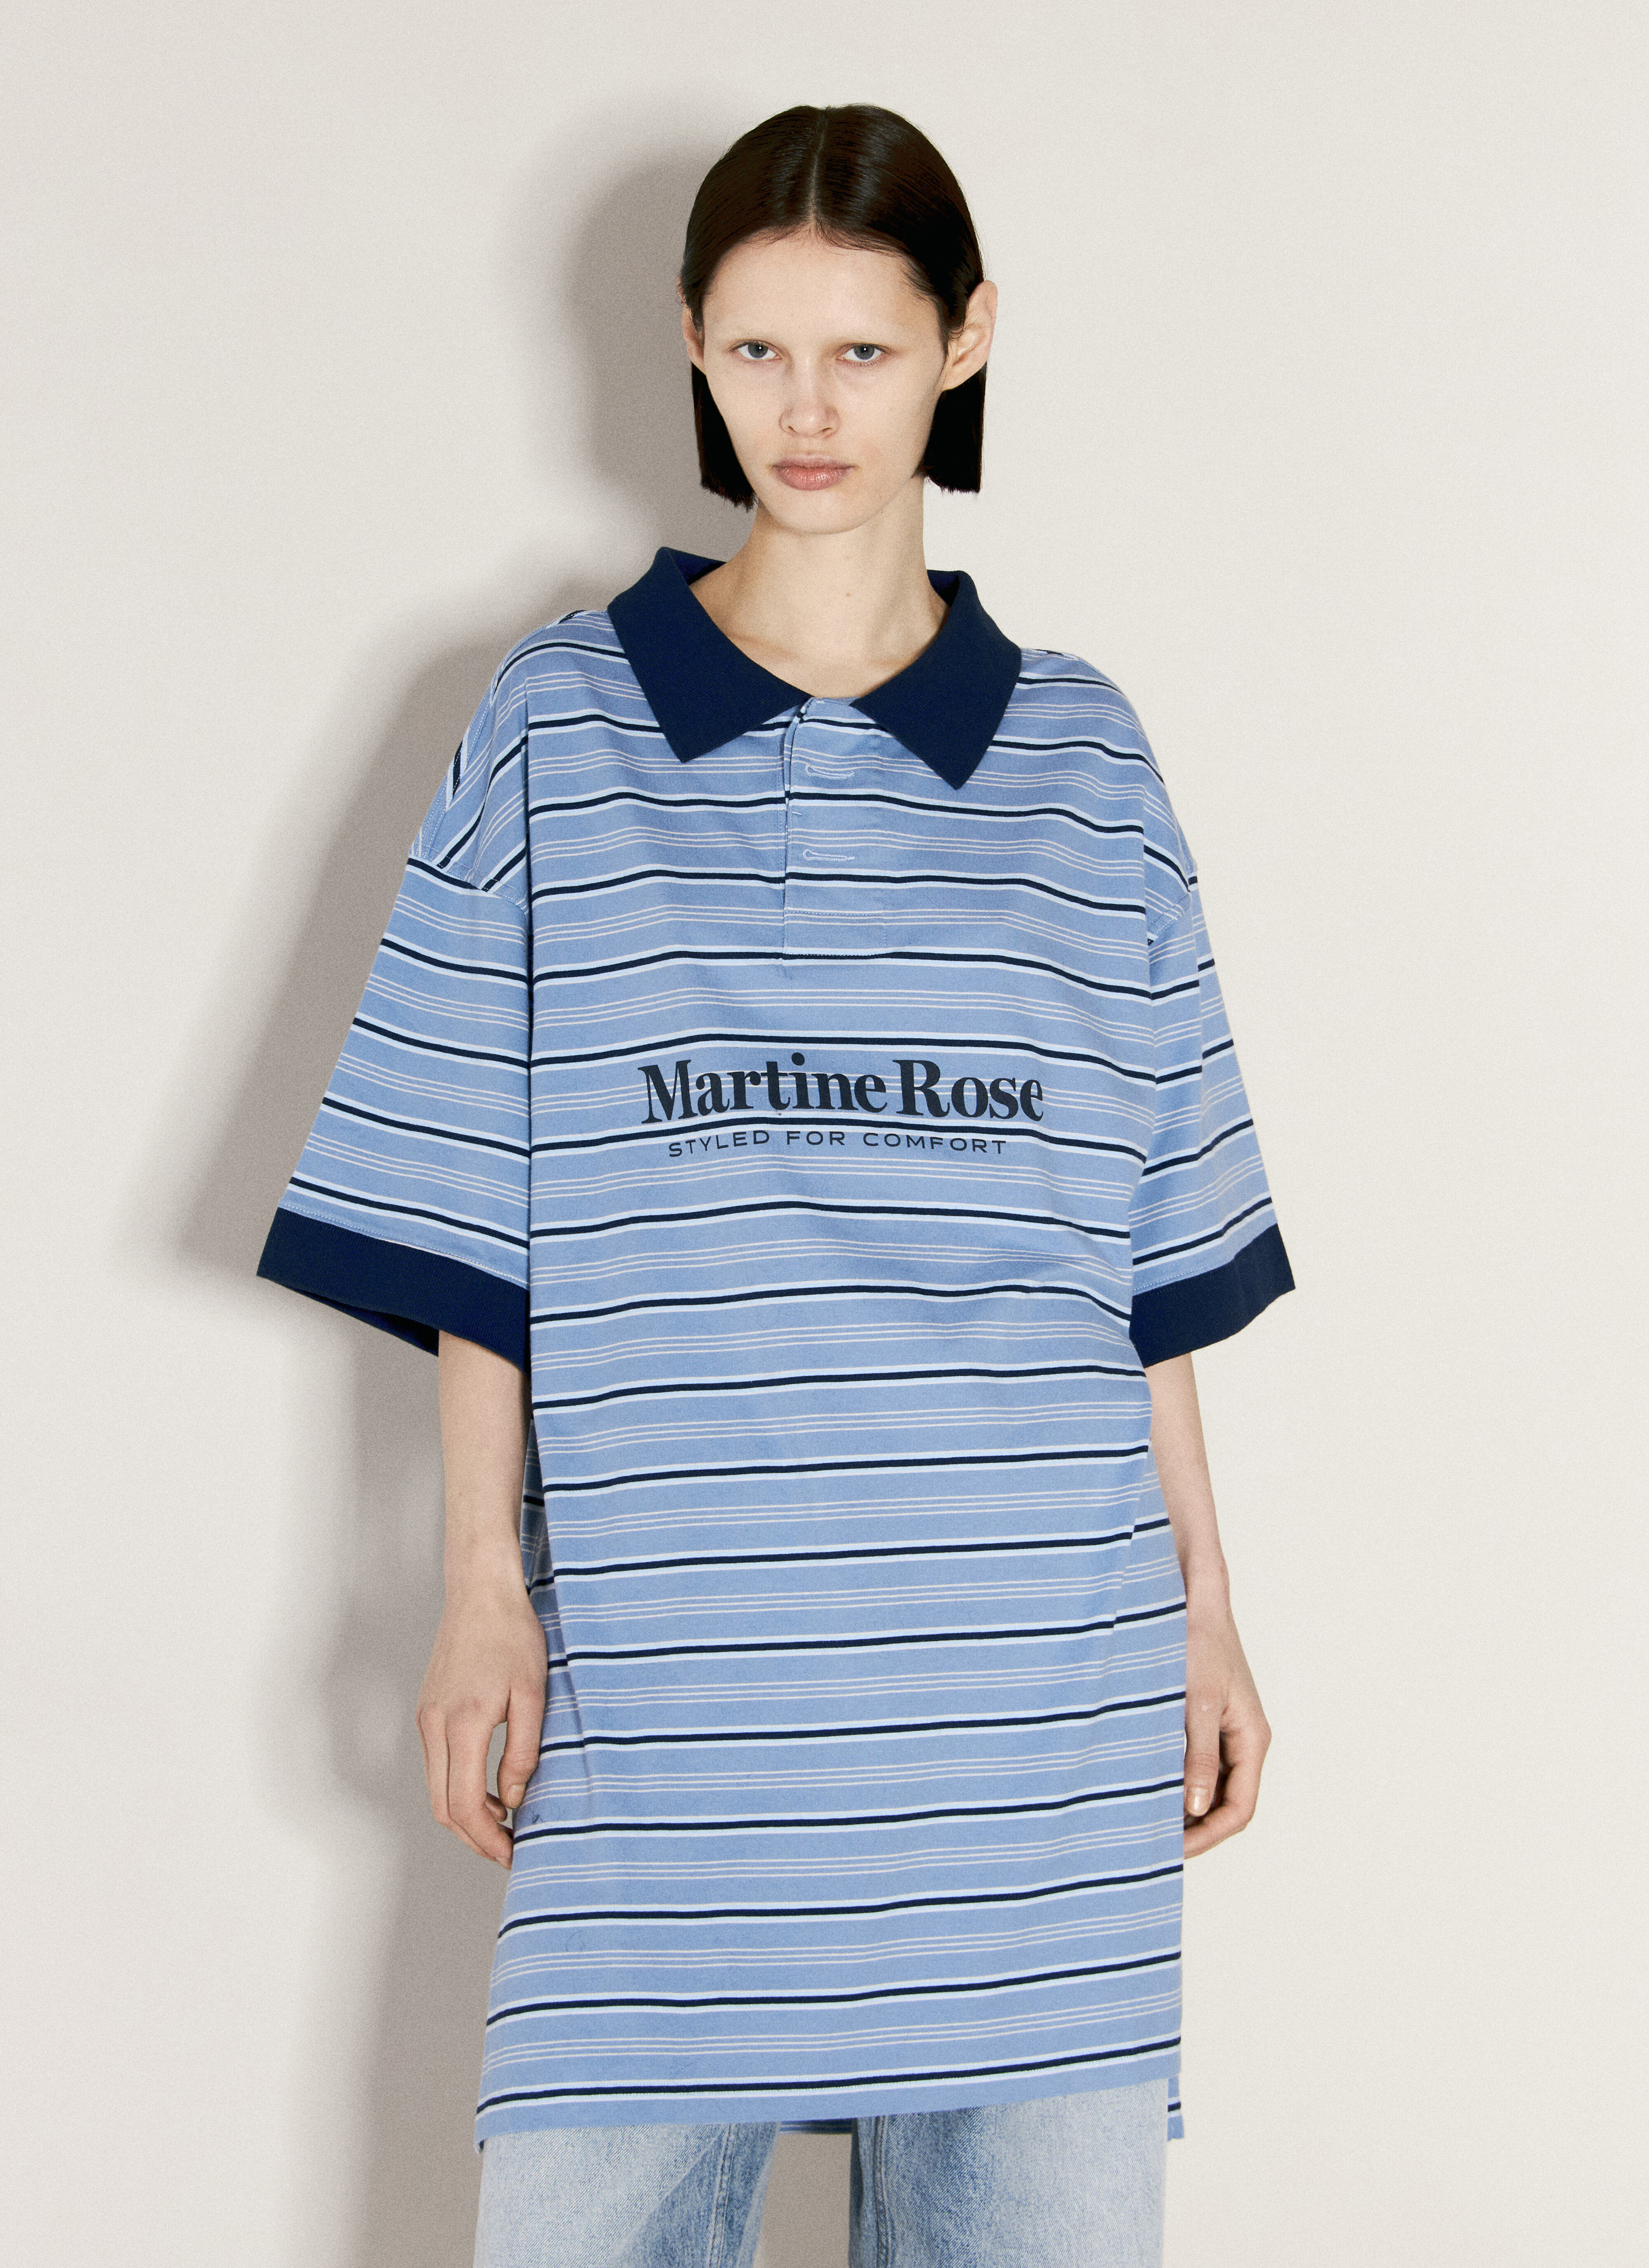 Martine Rose 条纹 Polo 衫  粉色 mtr0255002